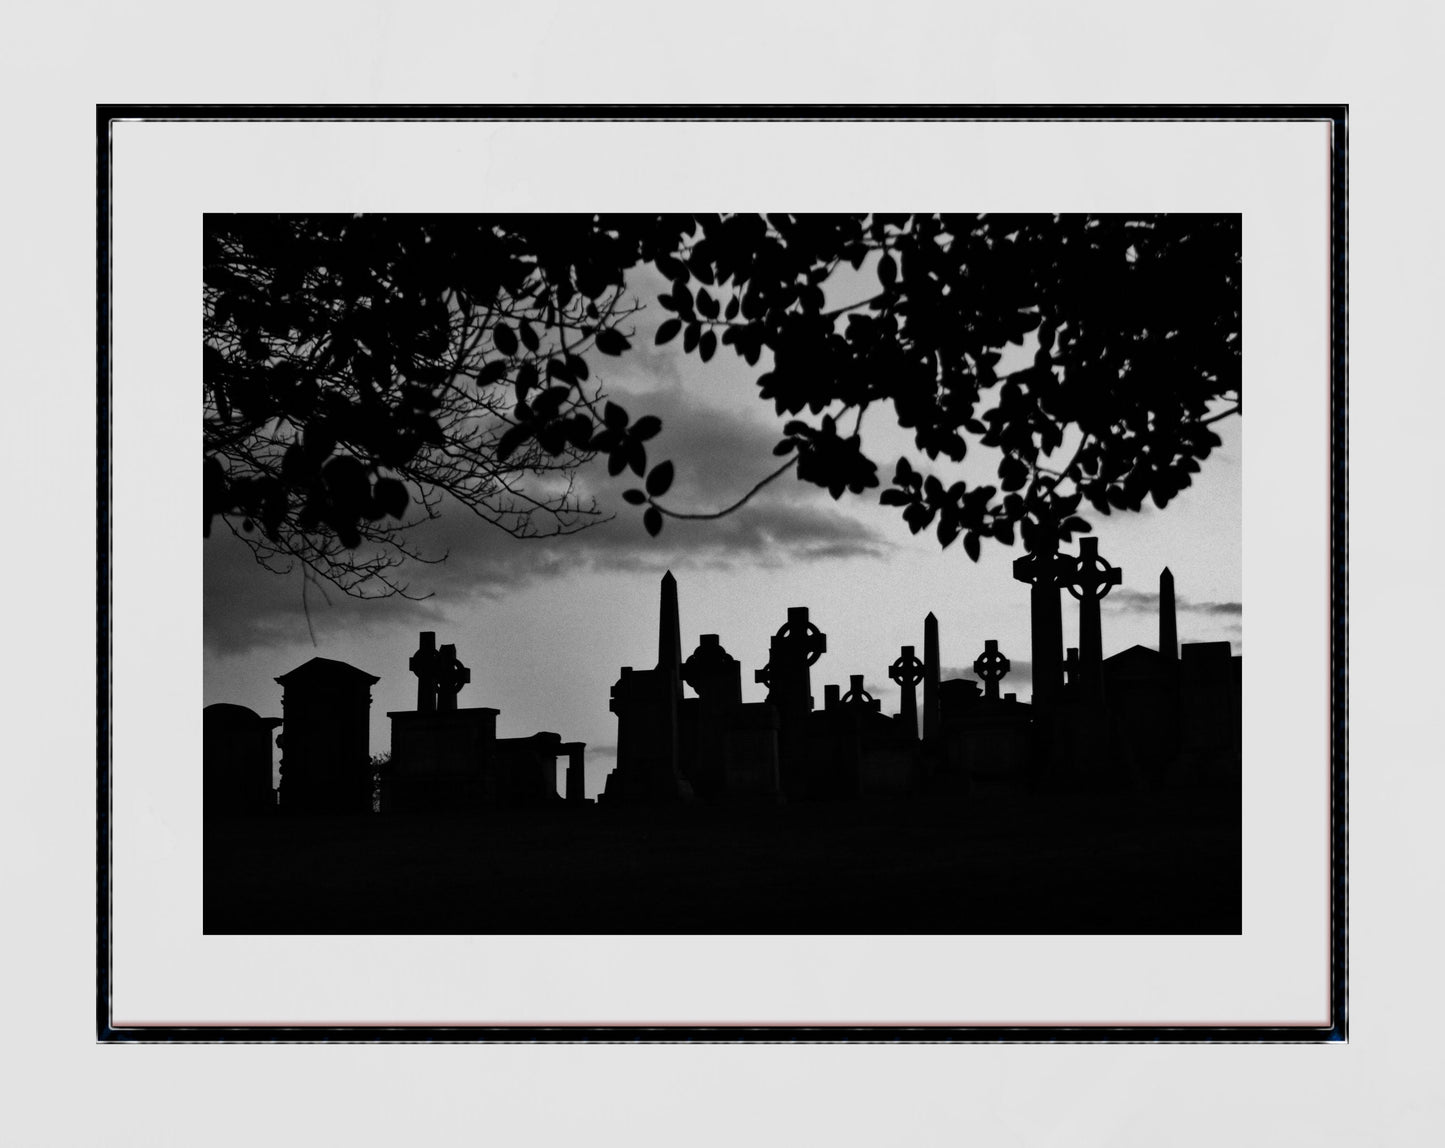 Glasgow Necropolis Graveyard Black And White Photography Poster